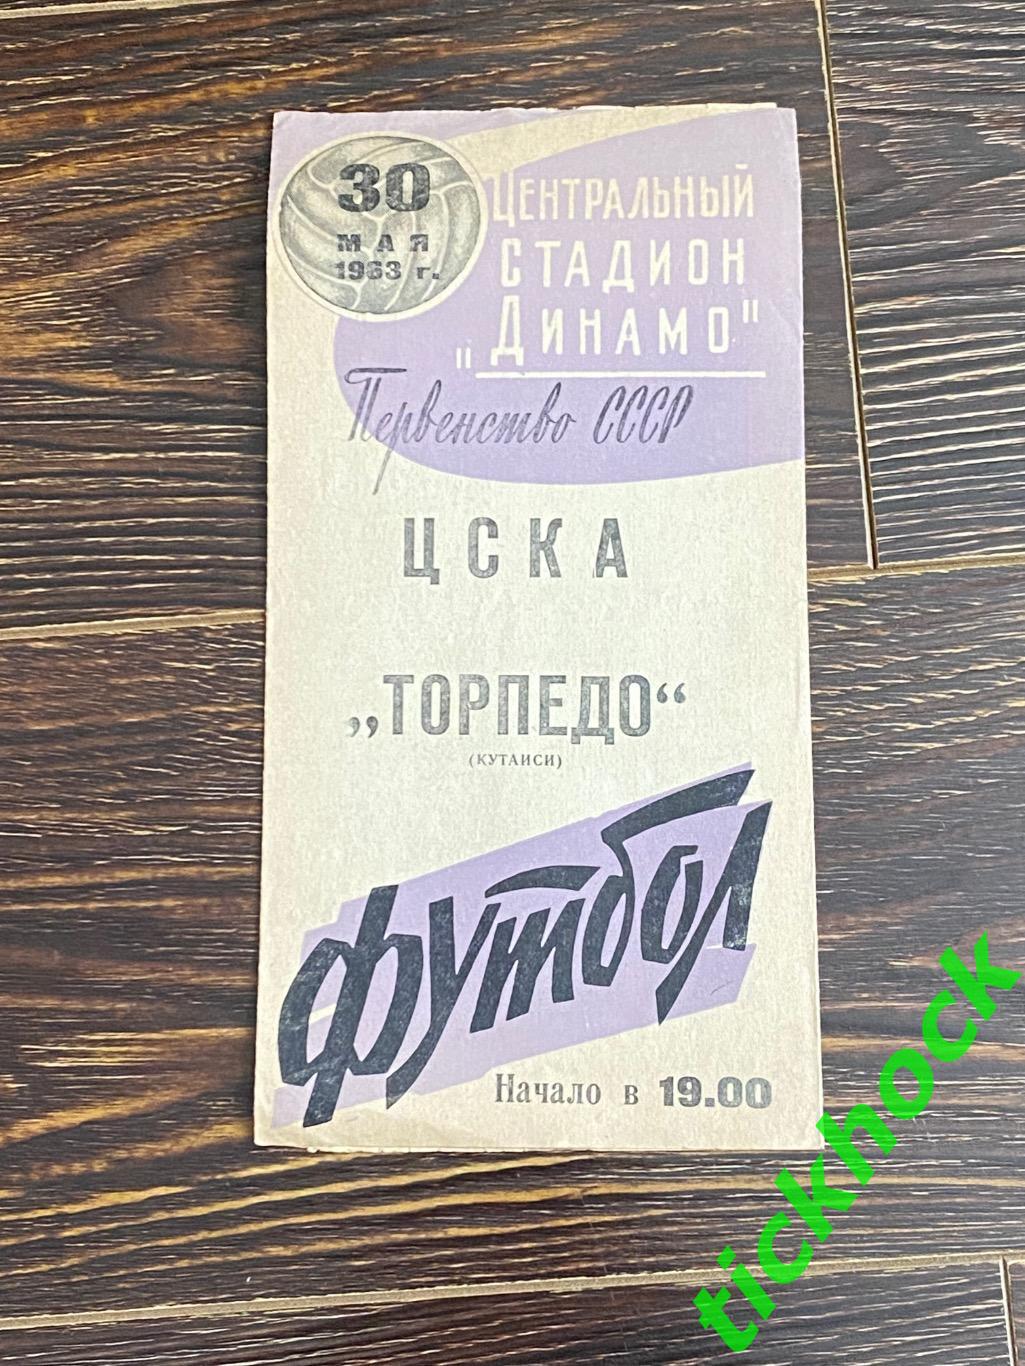 ЦСКА - Торпедо Кутаиси 1963 Чемпионат СССР -- SY